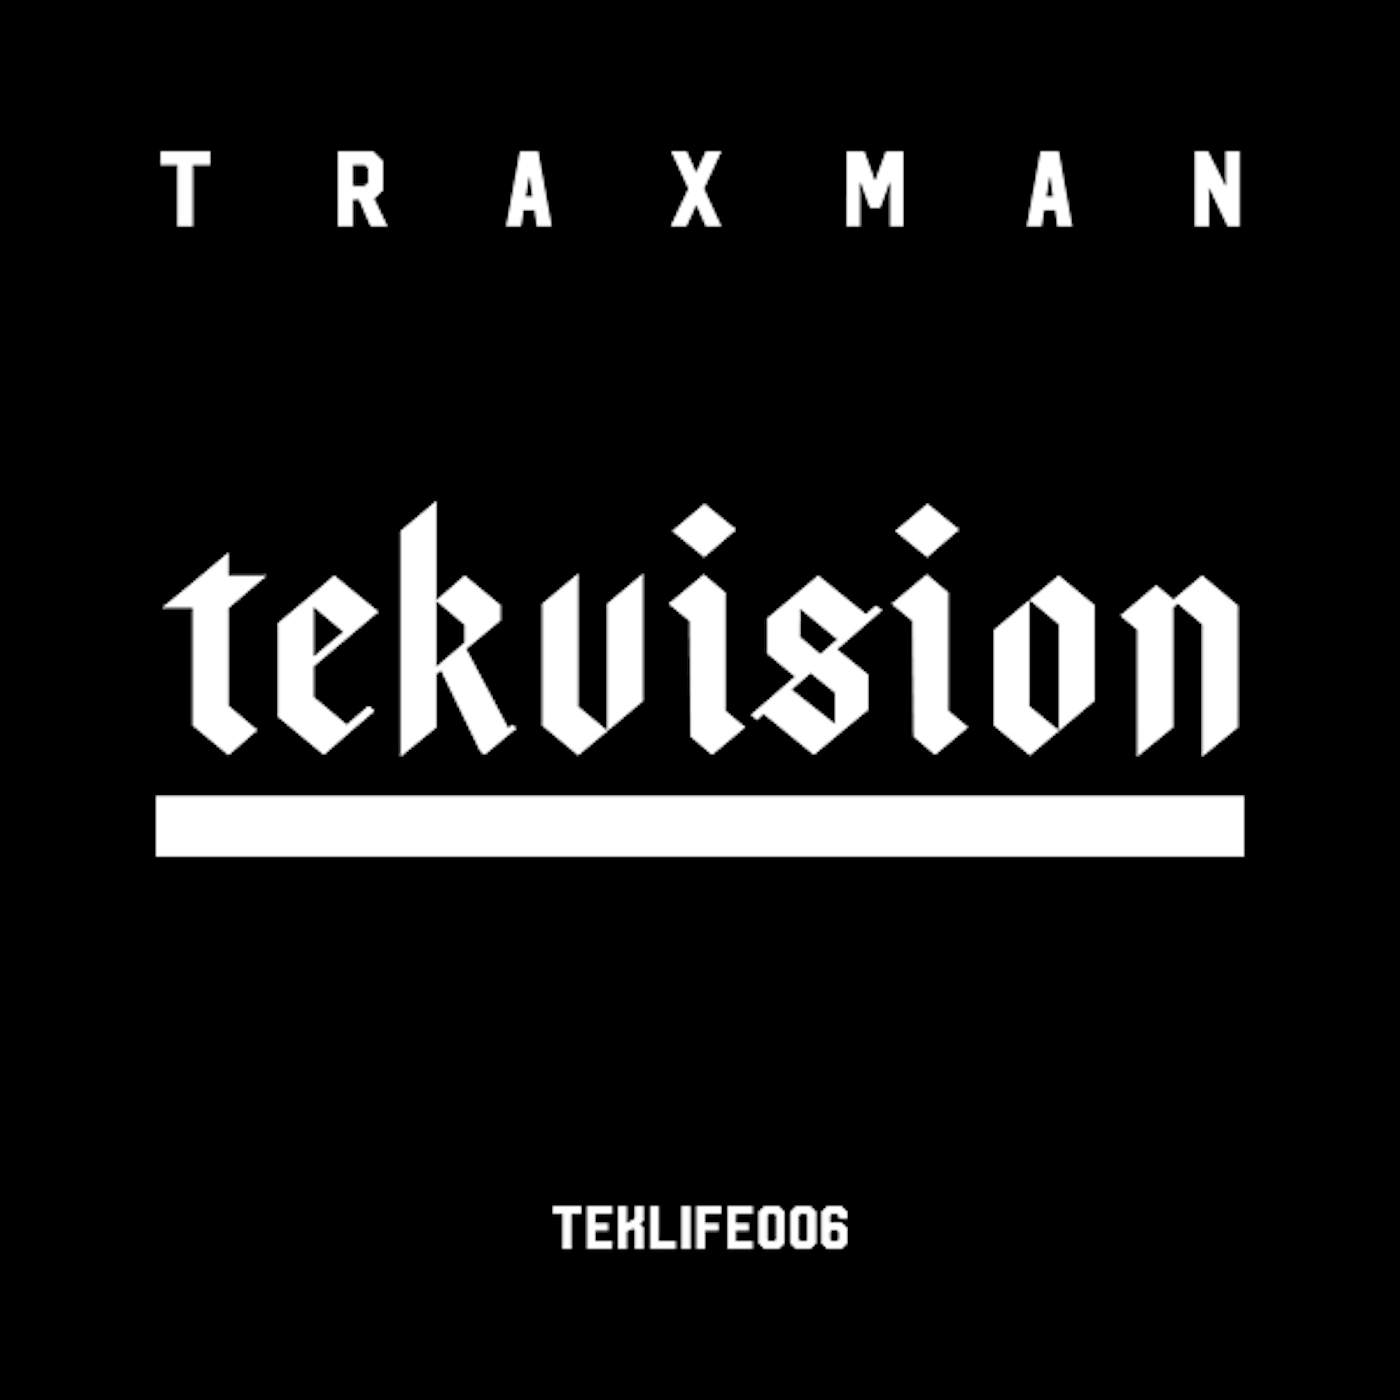 Traxman Tekvision Vinyl Record